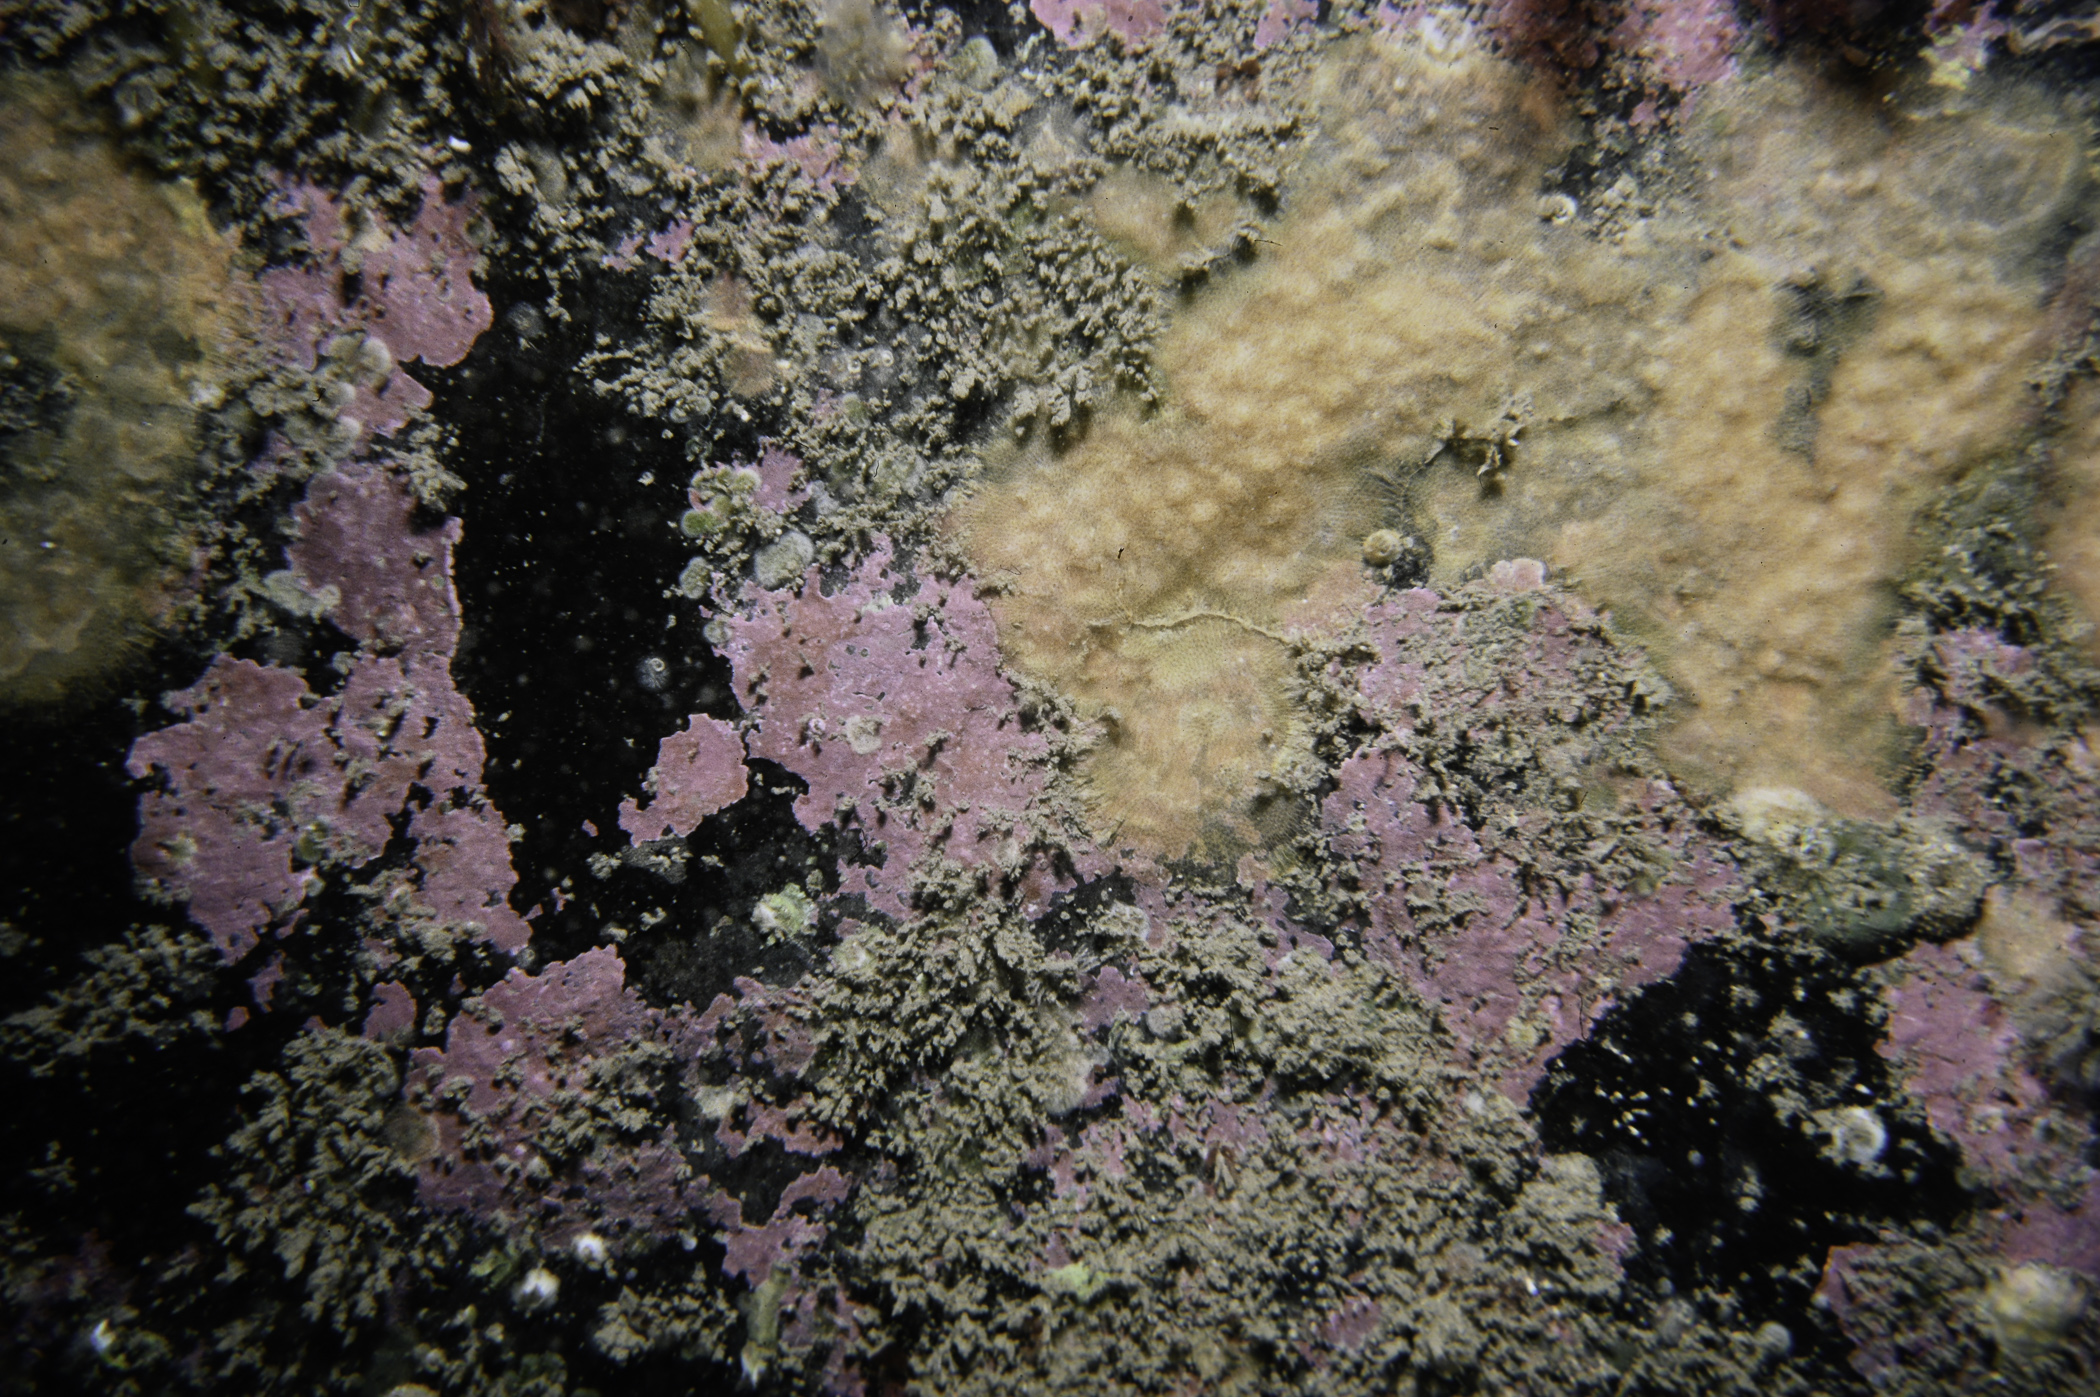 Parasmittina trispinosa. Site: N of Otter Rock, Gid Point. 